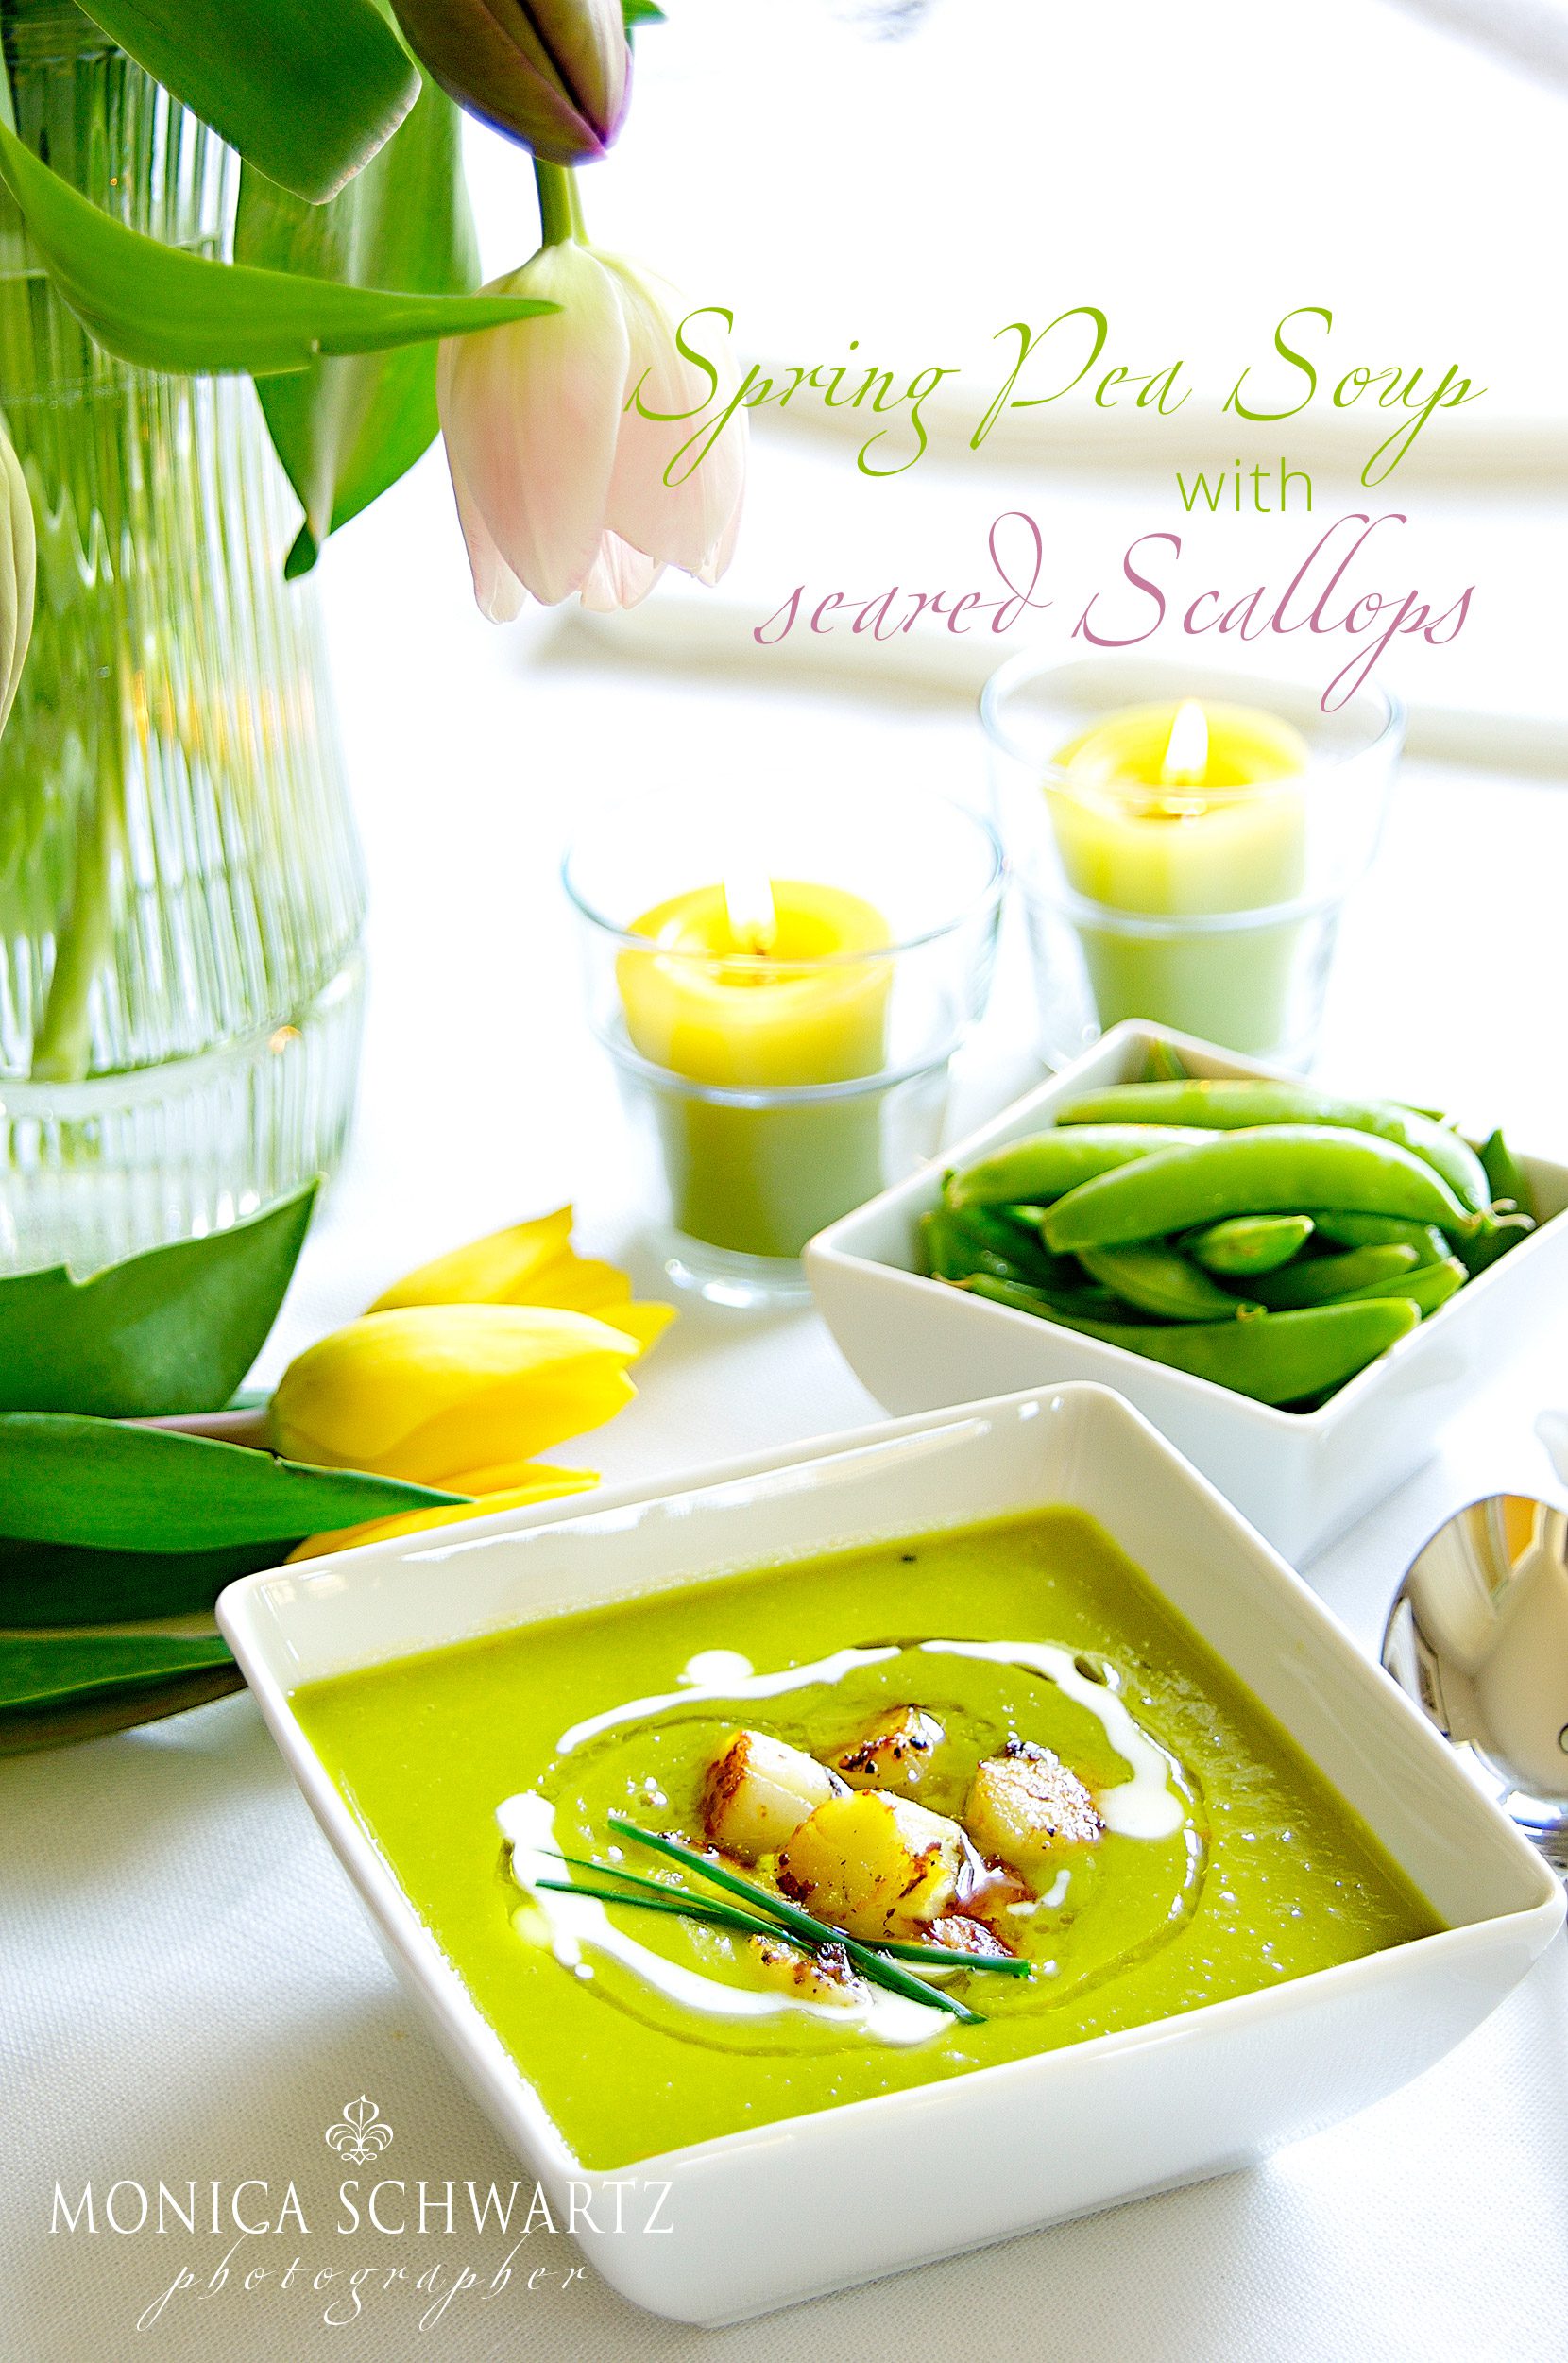 Spring-Pea-Soup-with-Seared-Scallops-recipe